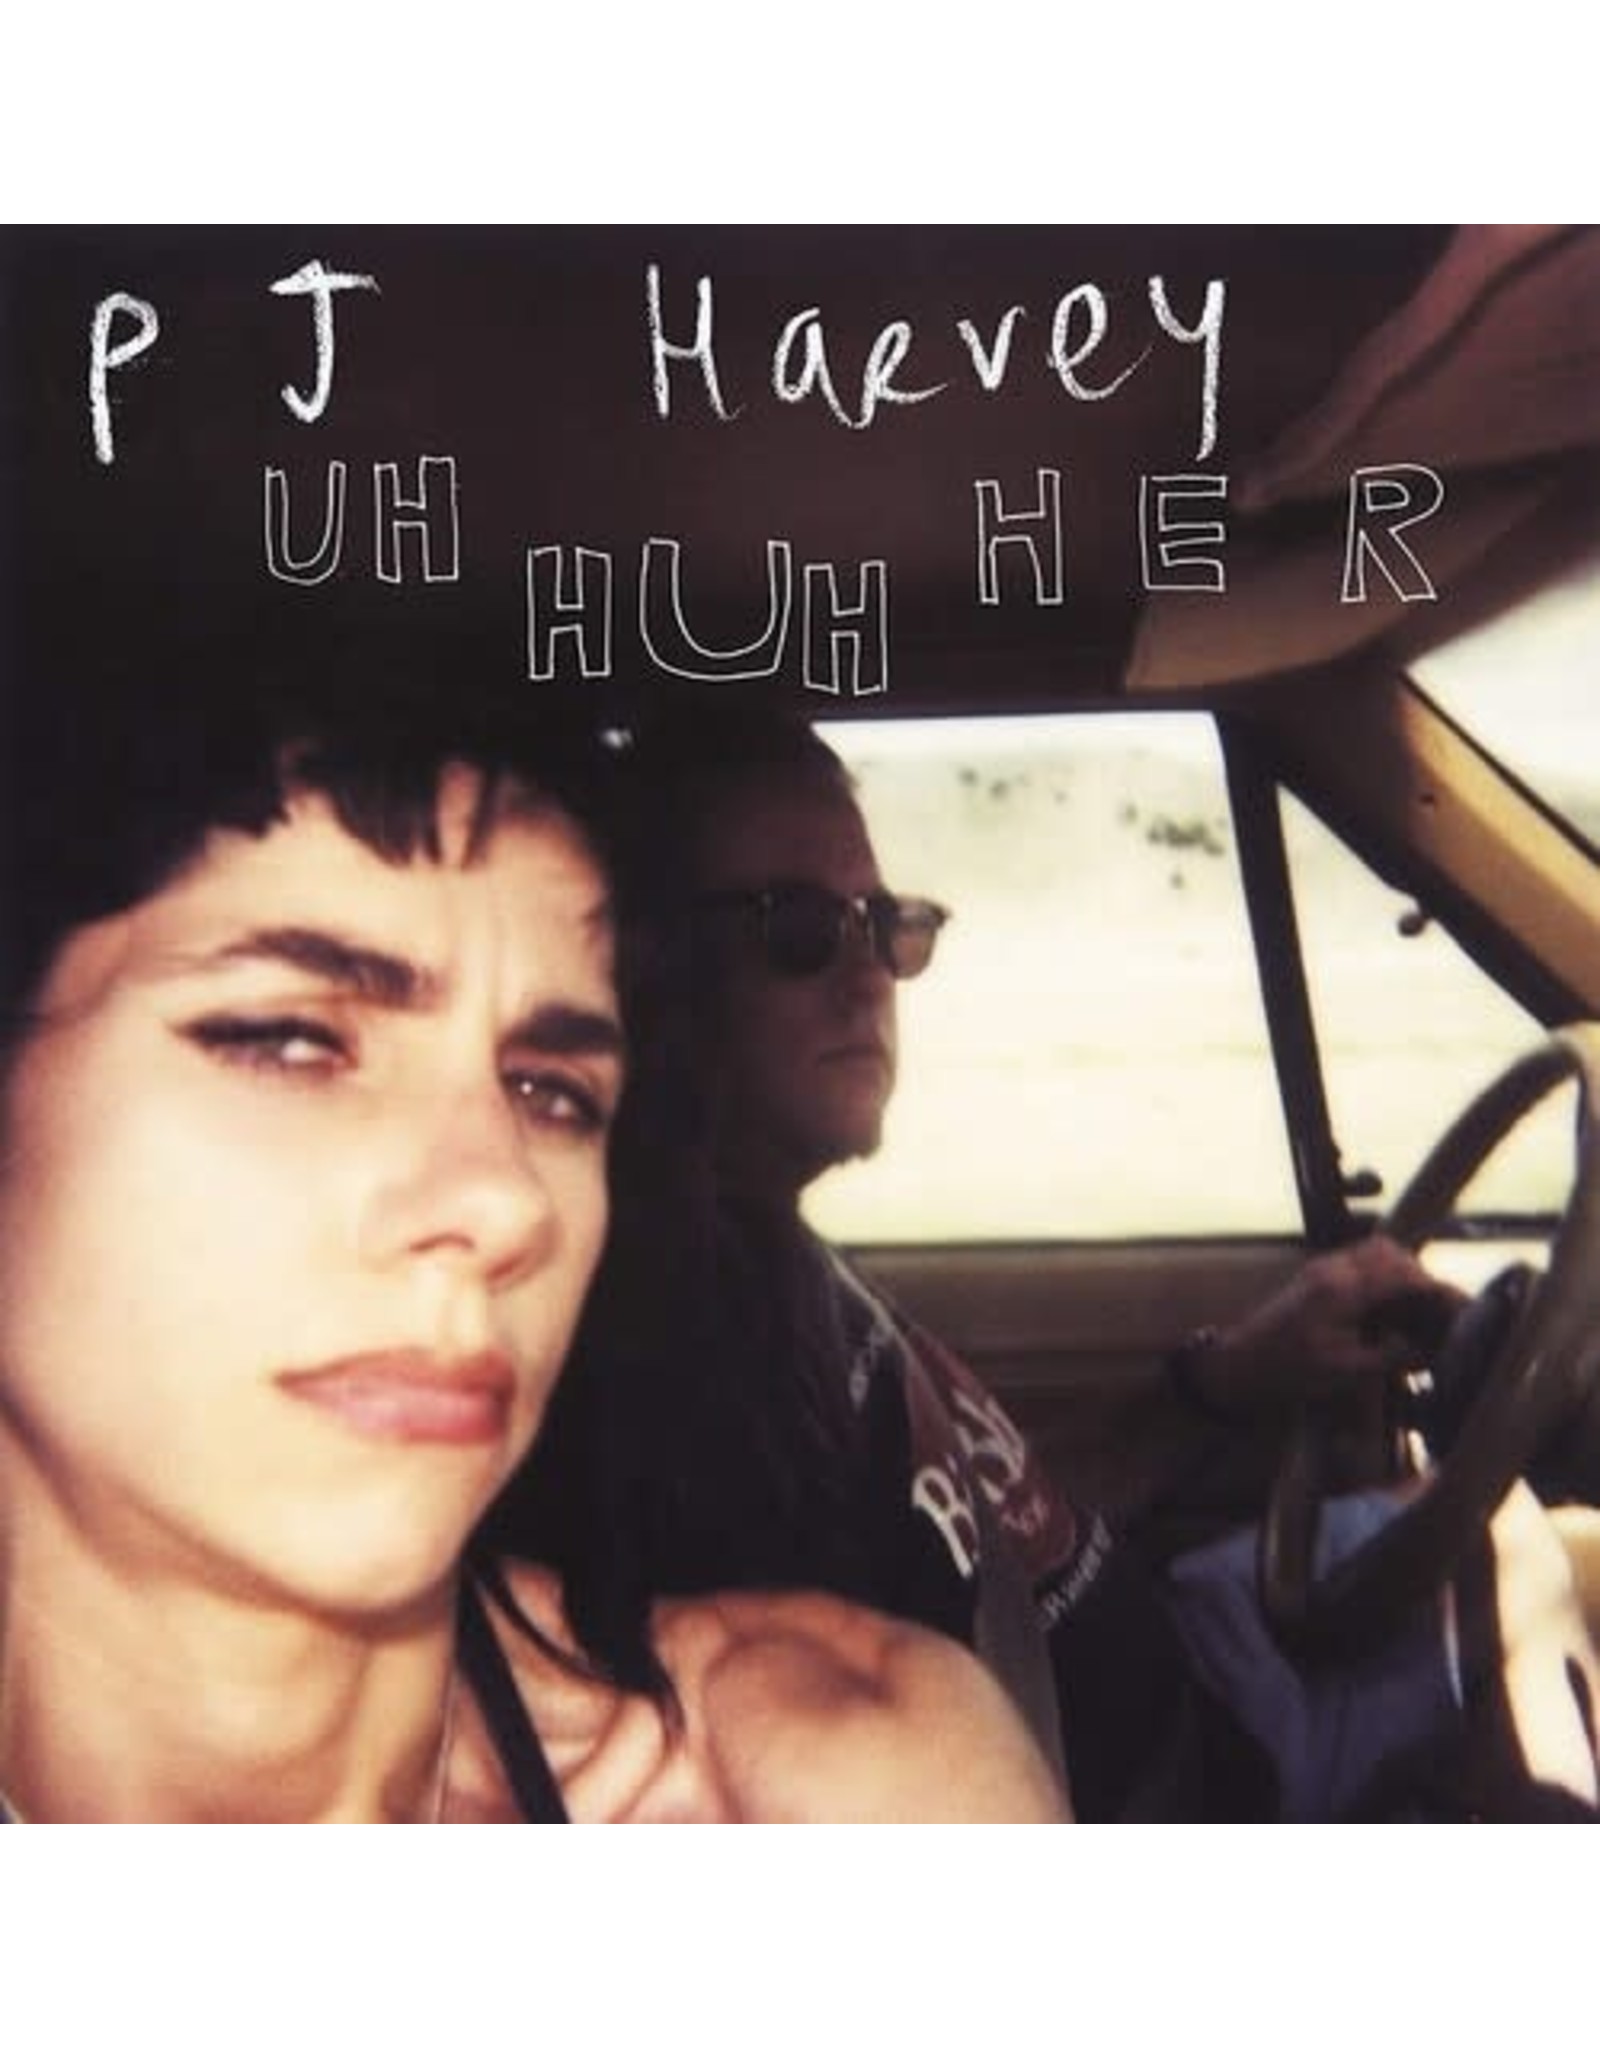 New Vinyl PJ Harvey - Uh Huh Her LP